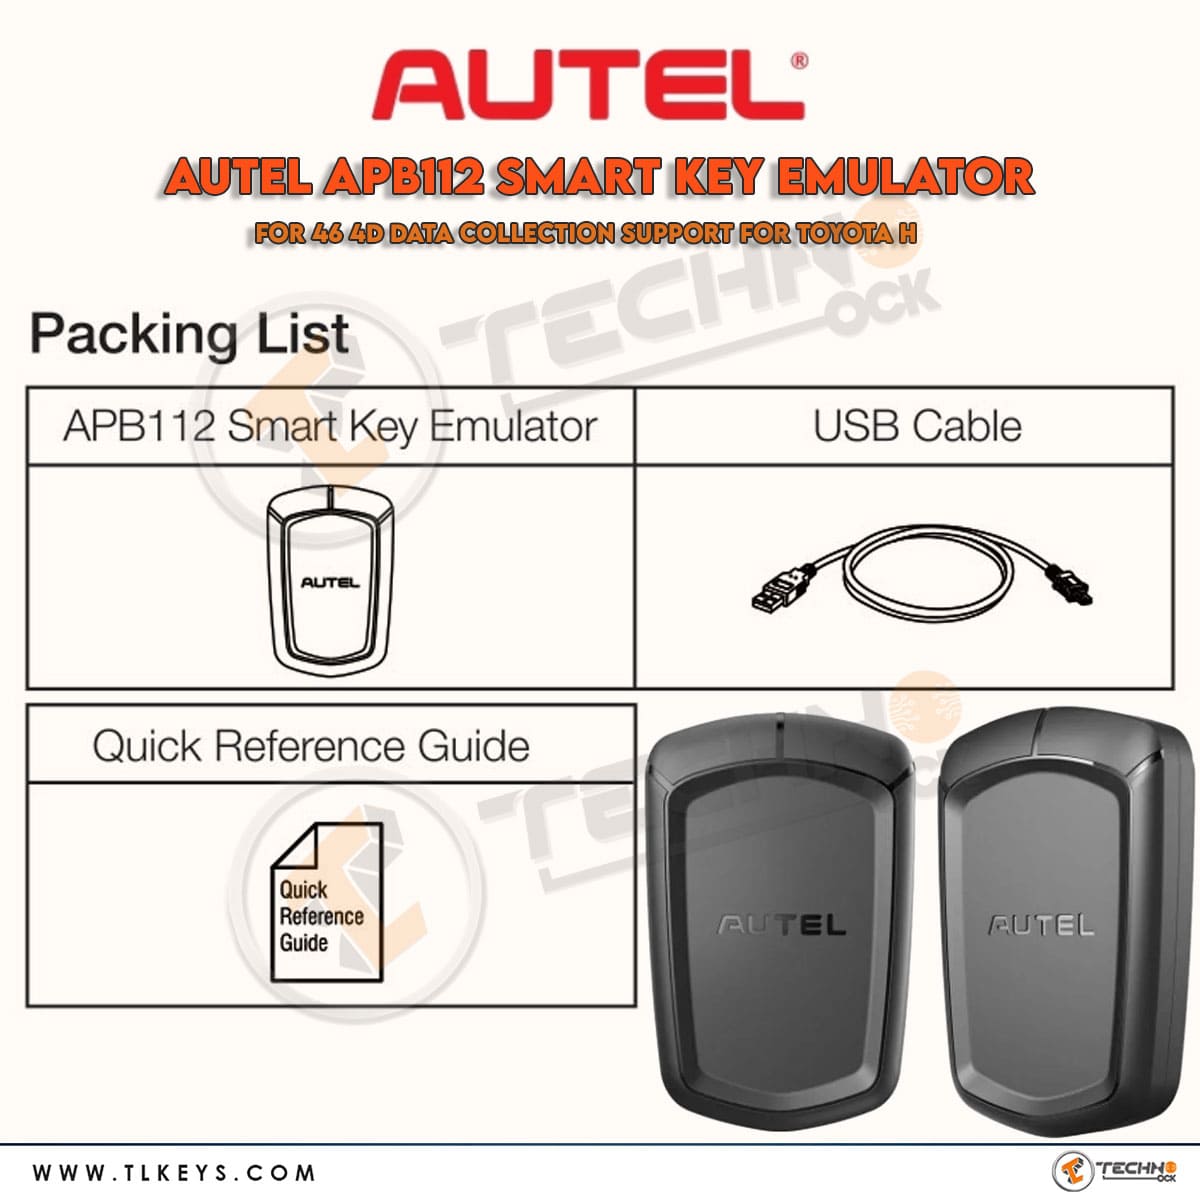 Autel APB112 Smart Key Simulator for Autel IMMO Key Programming Tools